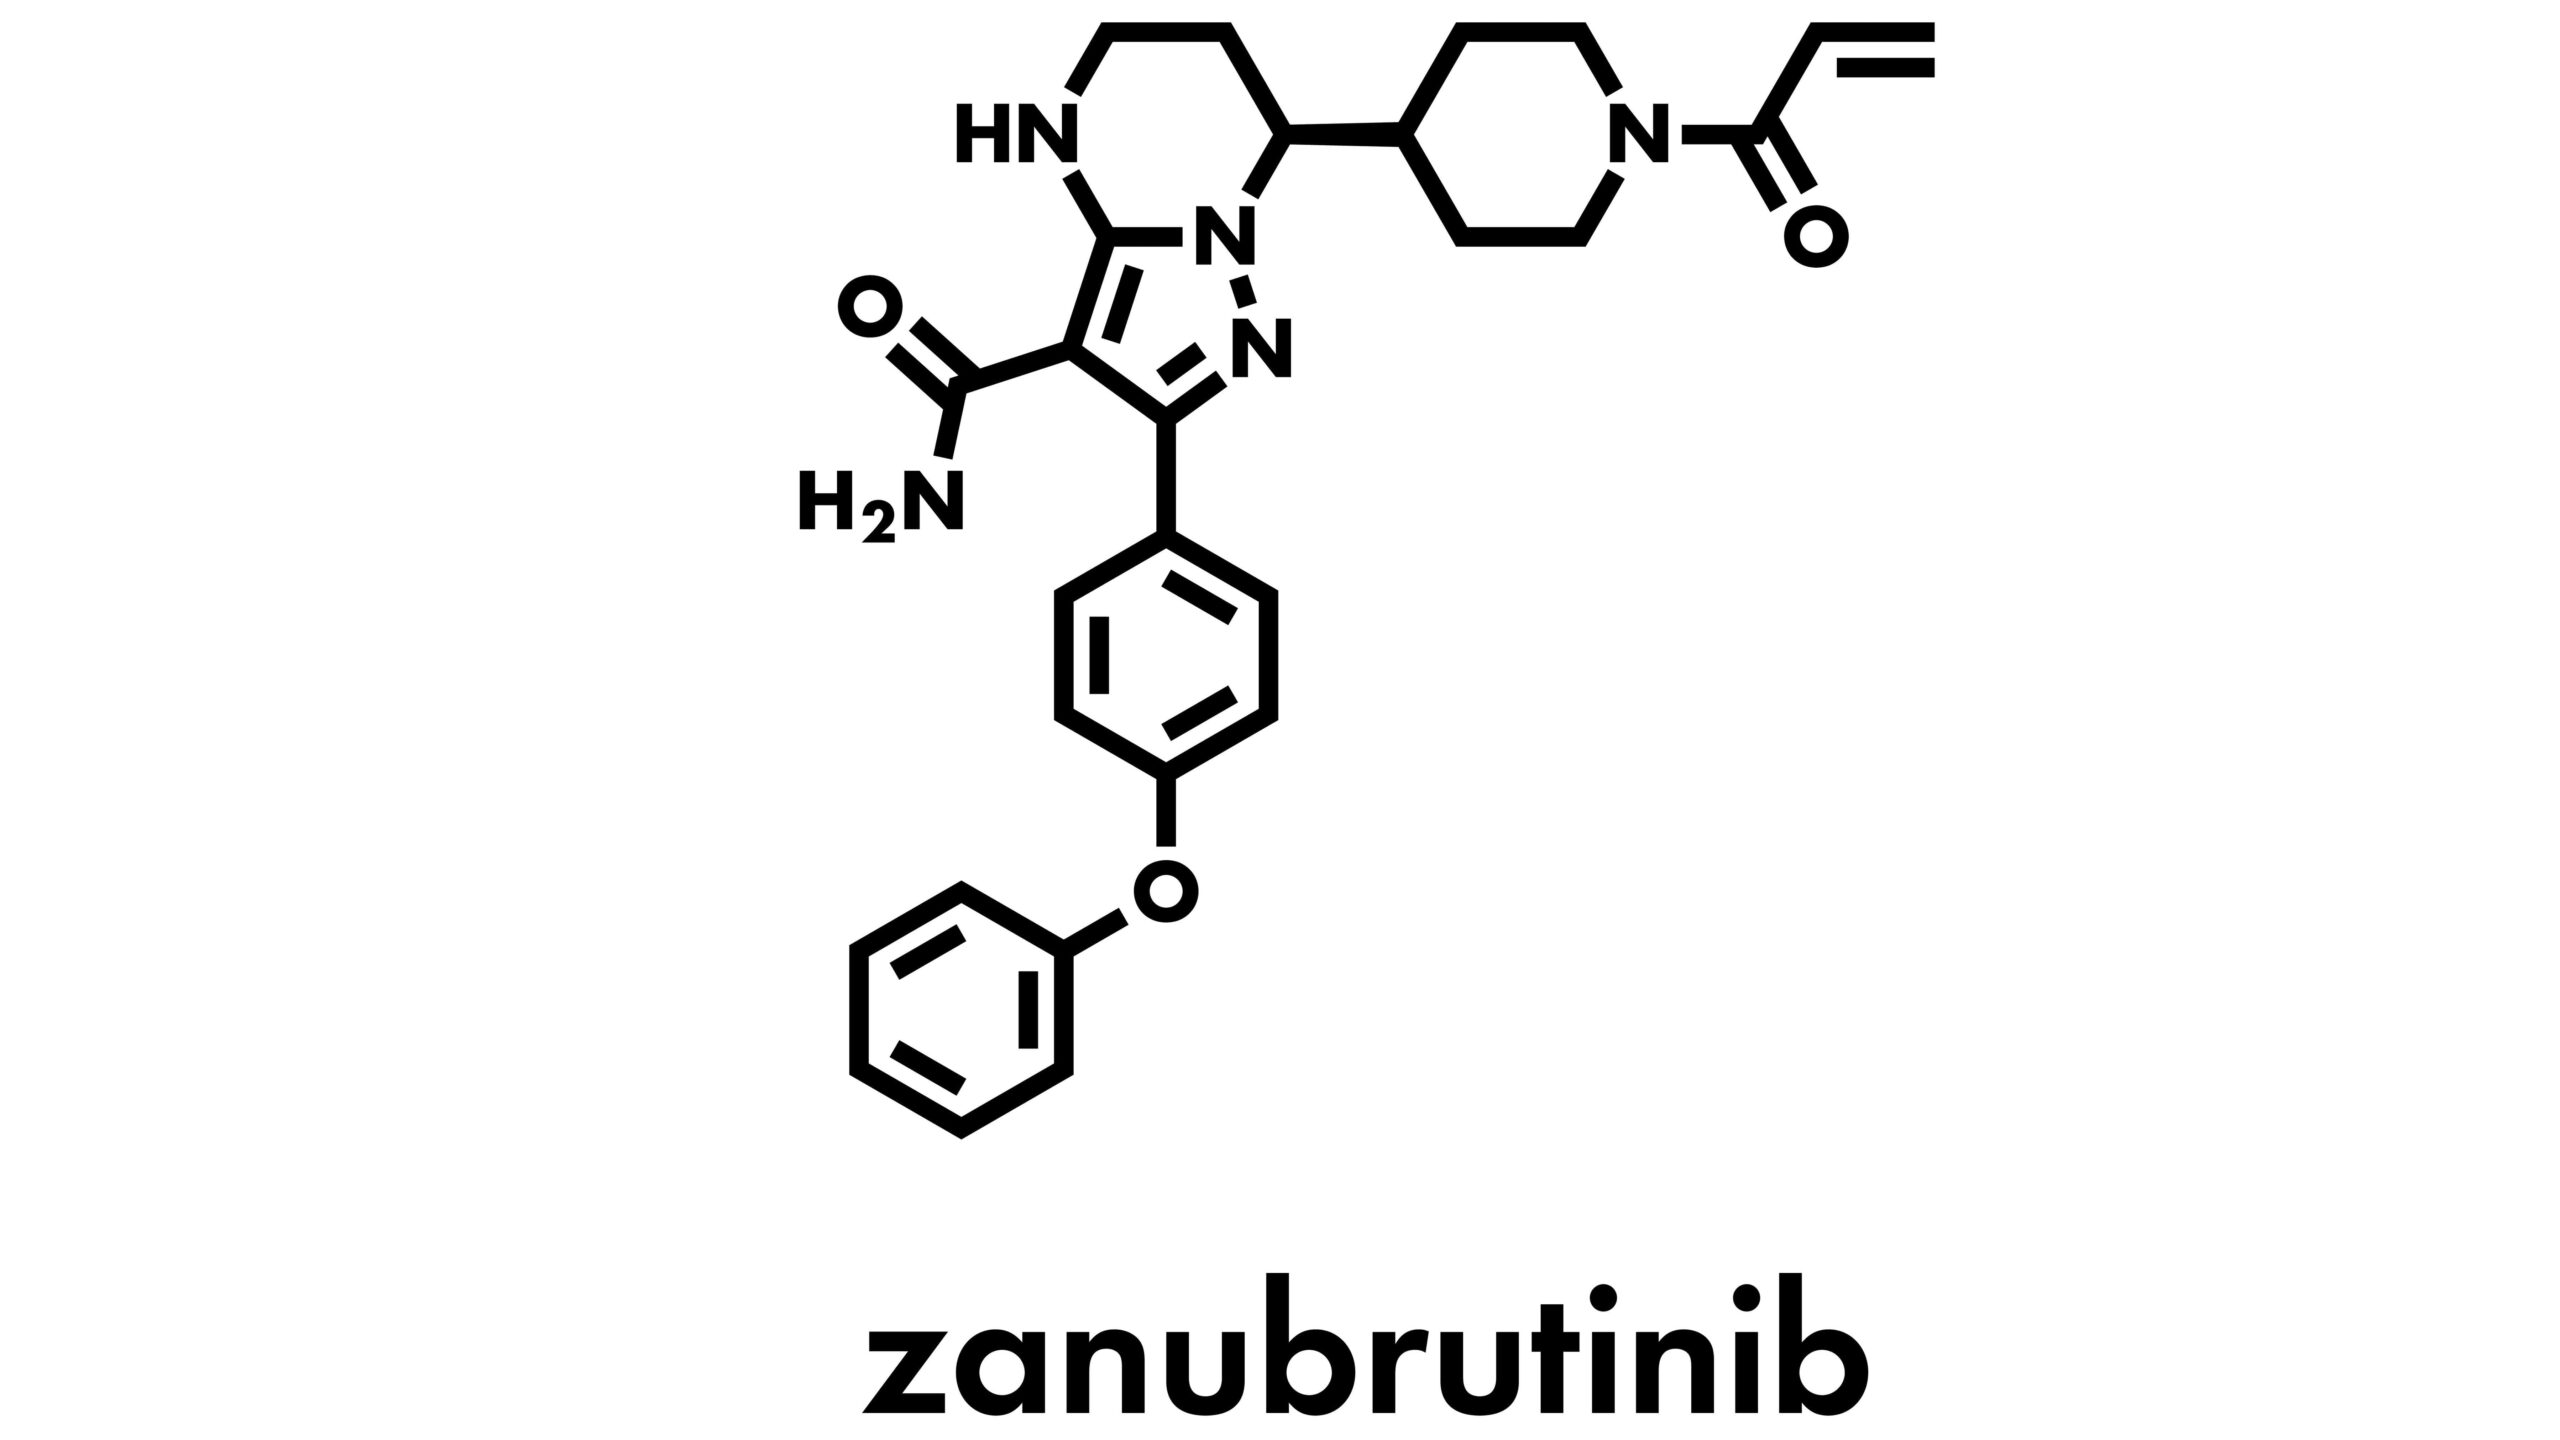 Comparing Pooled Safety Data From Zanubrutinib and Ibrutinib Trials